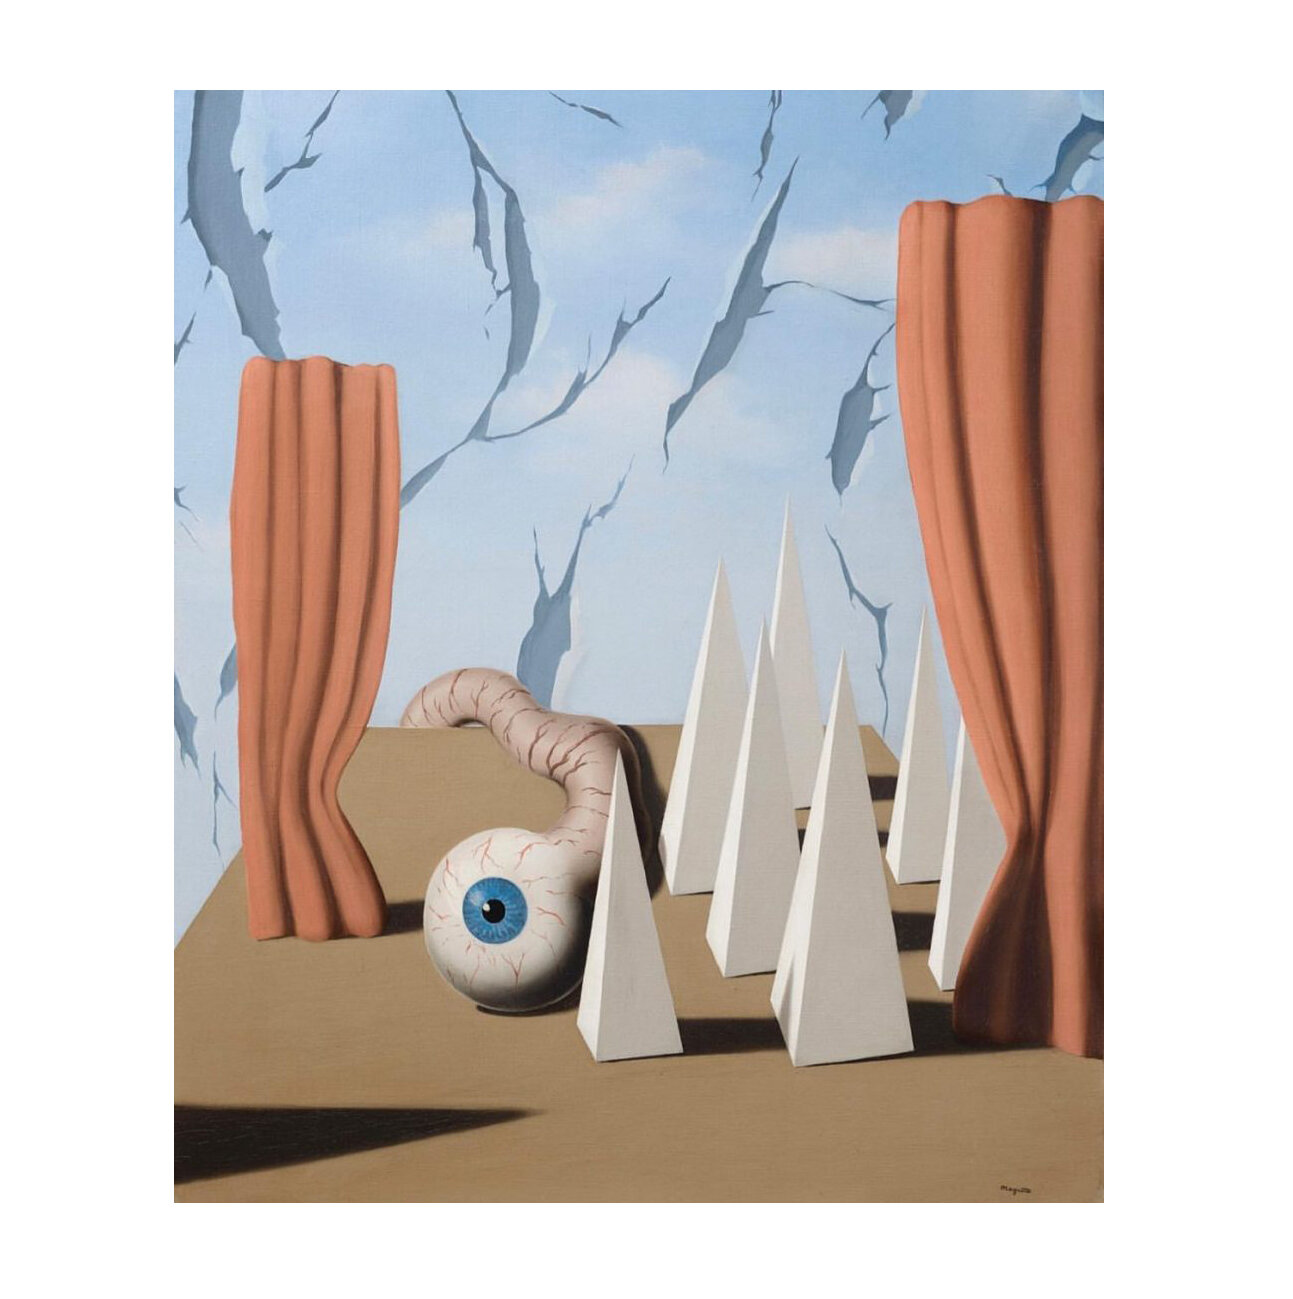  “Le Monde Poétique II”, 1937. Oil on canvas by Rene Magritte&nbsp;&nbsp;    